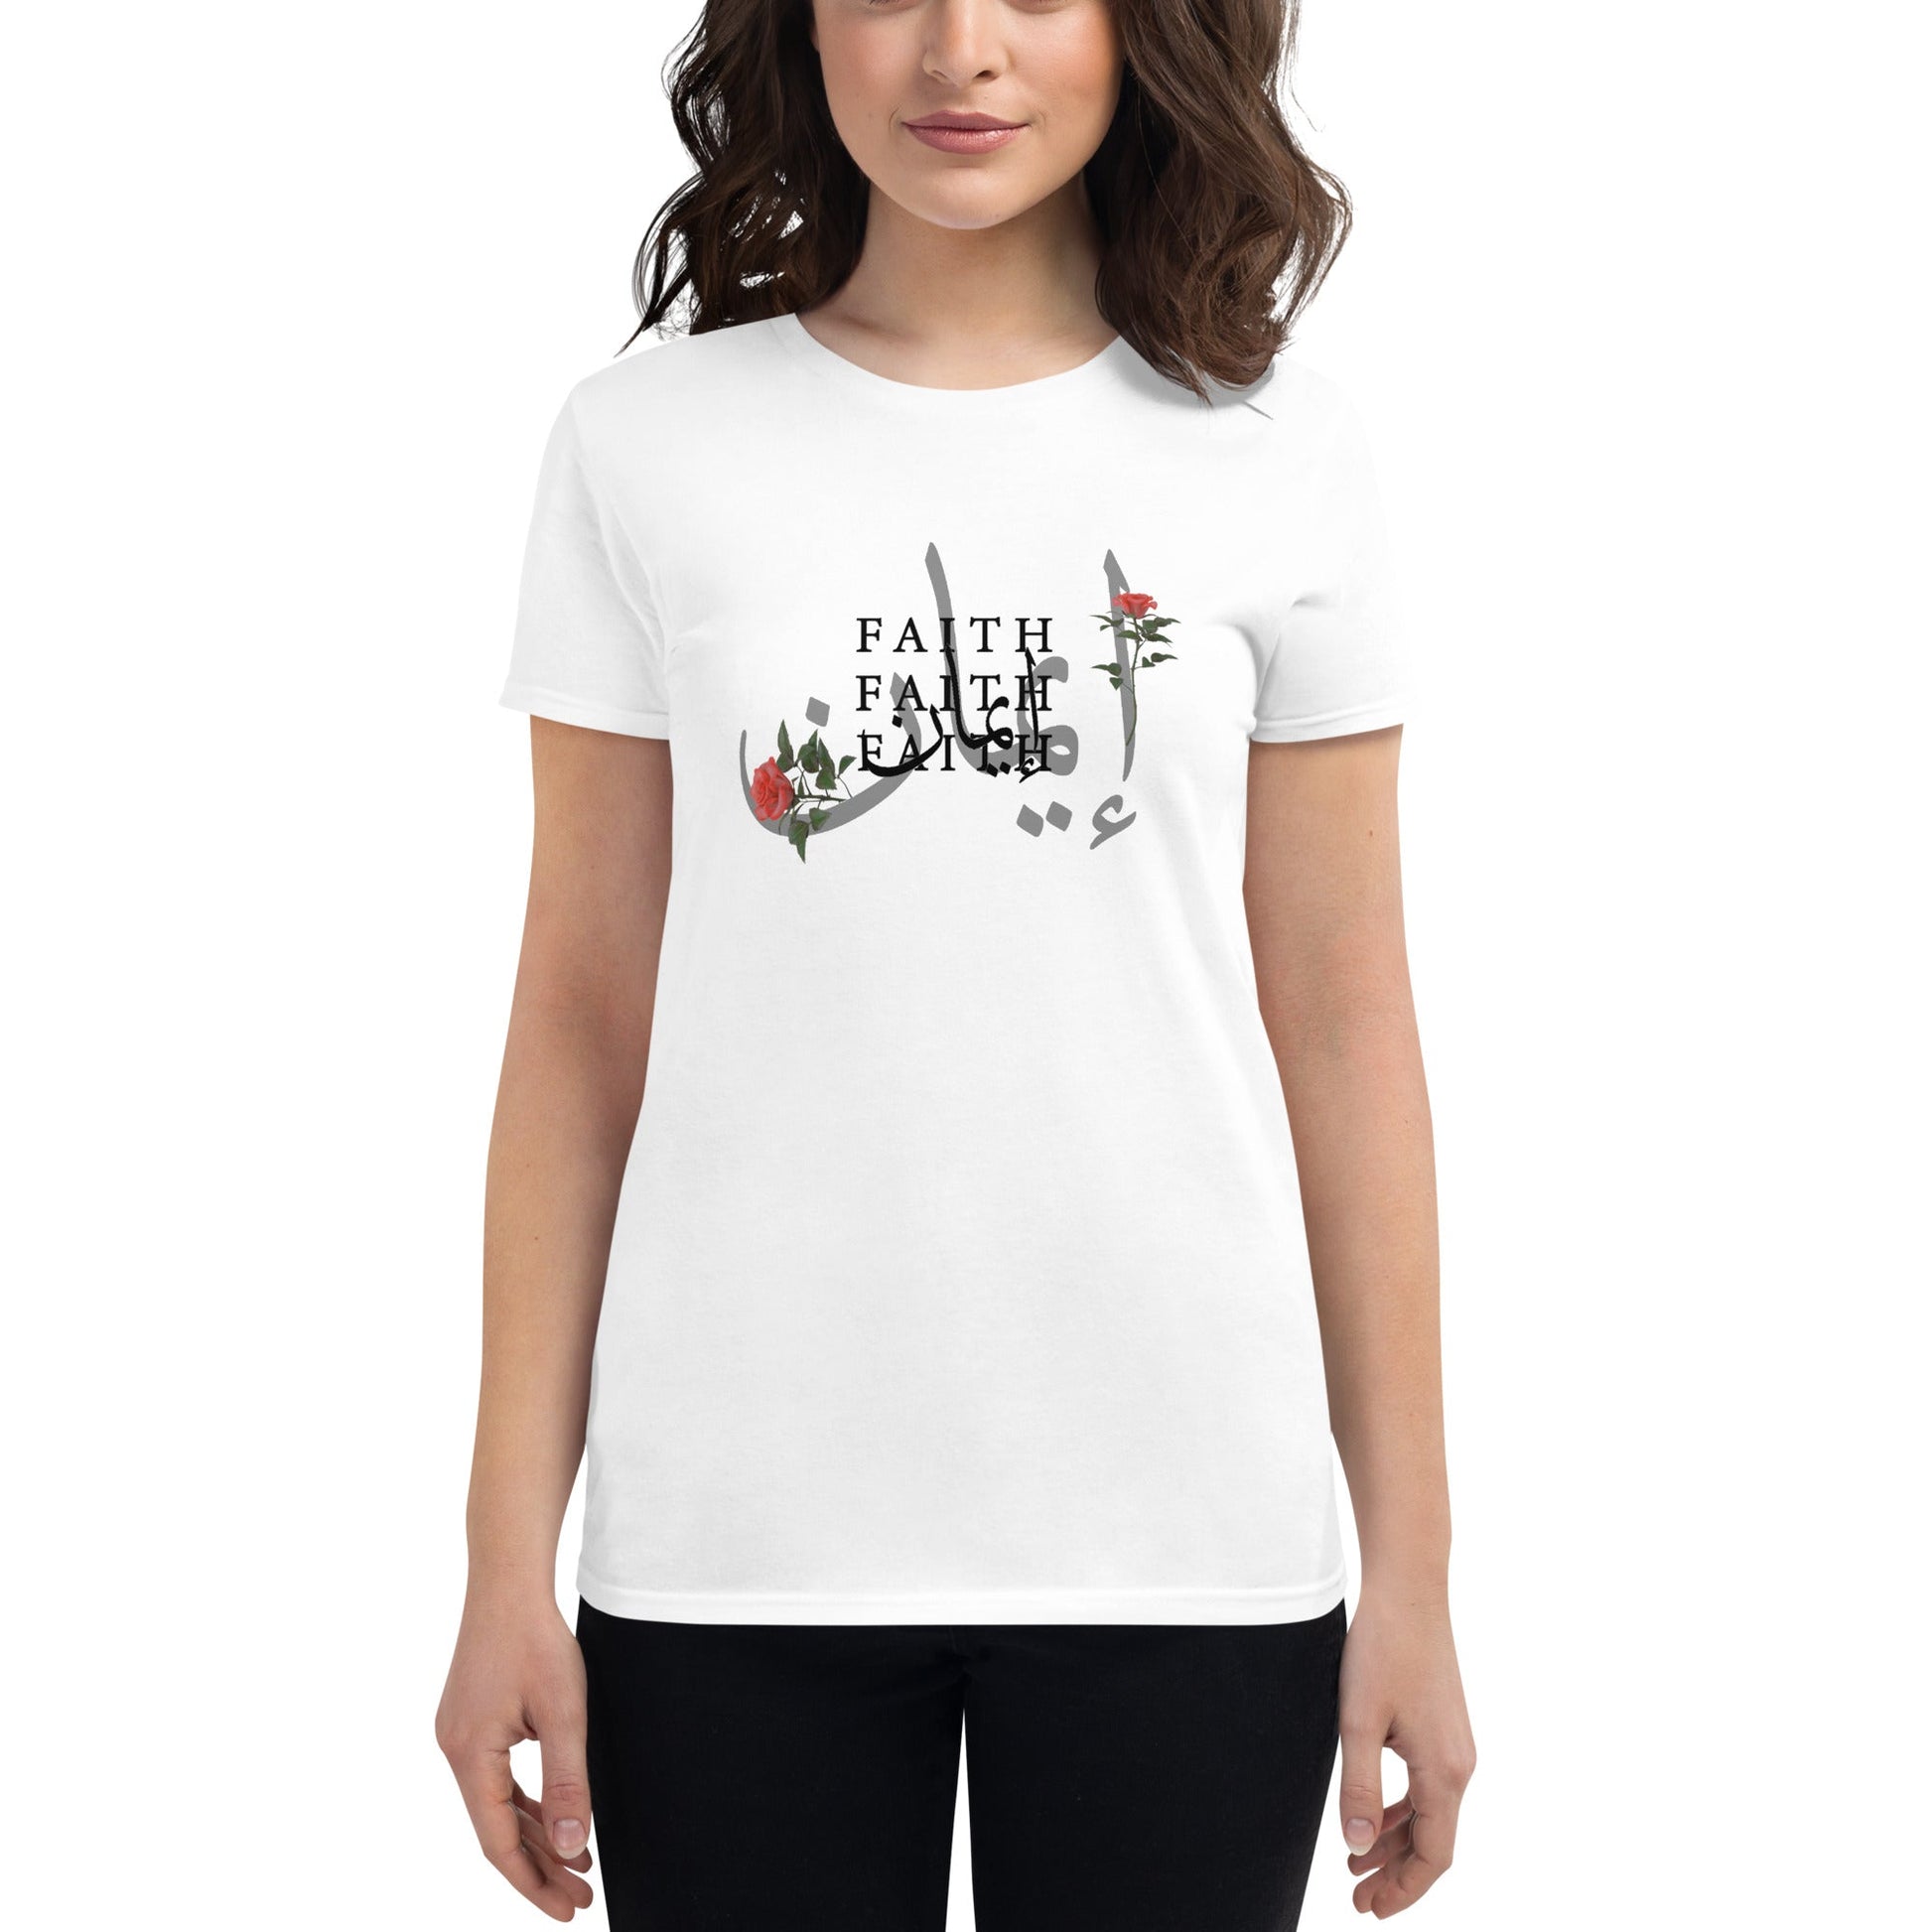 IMAAN Women's T-Shirt - Bonotee